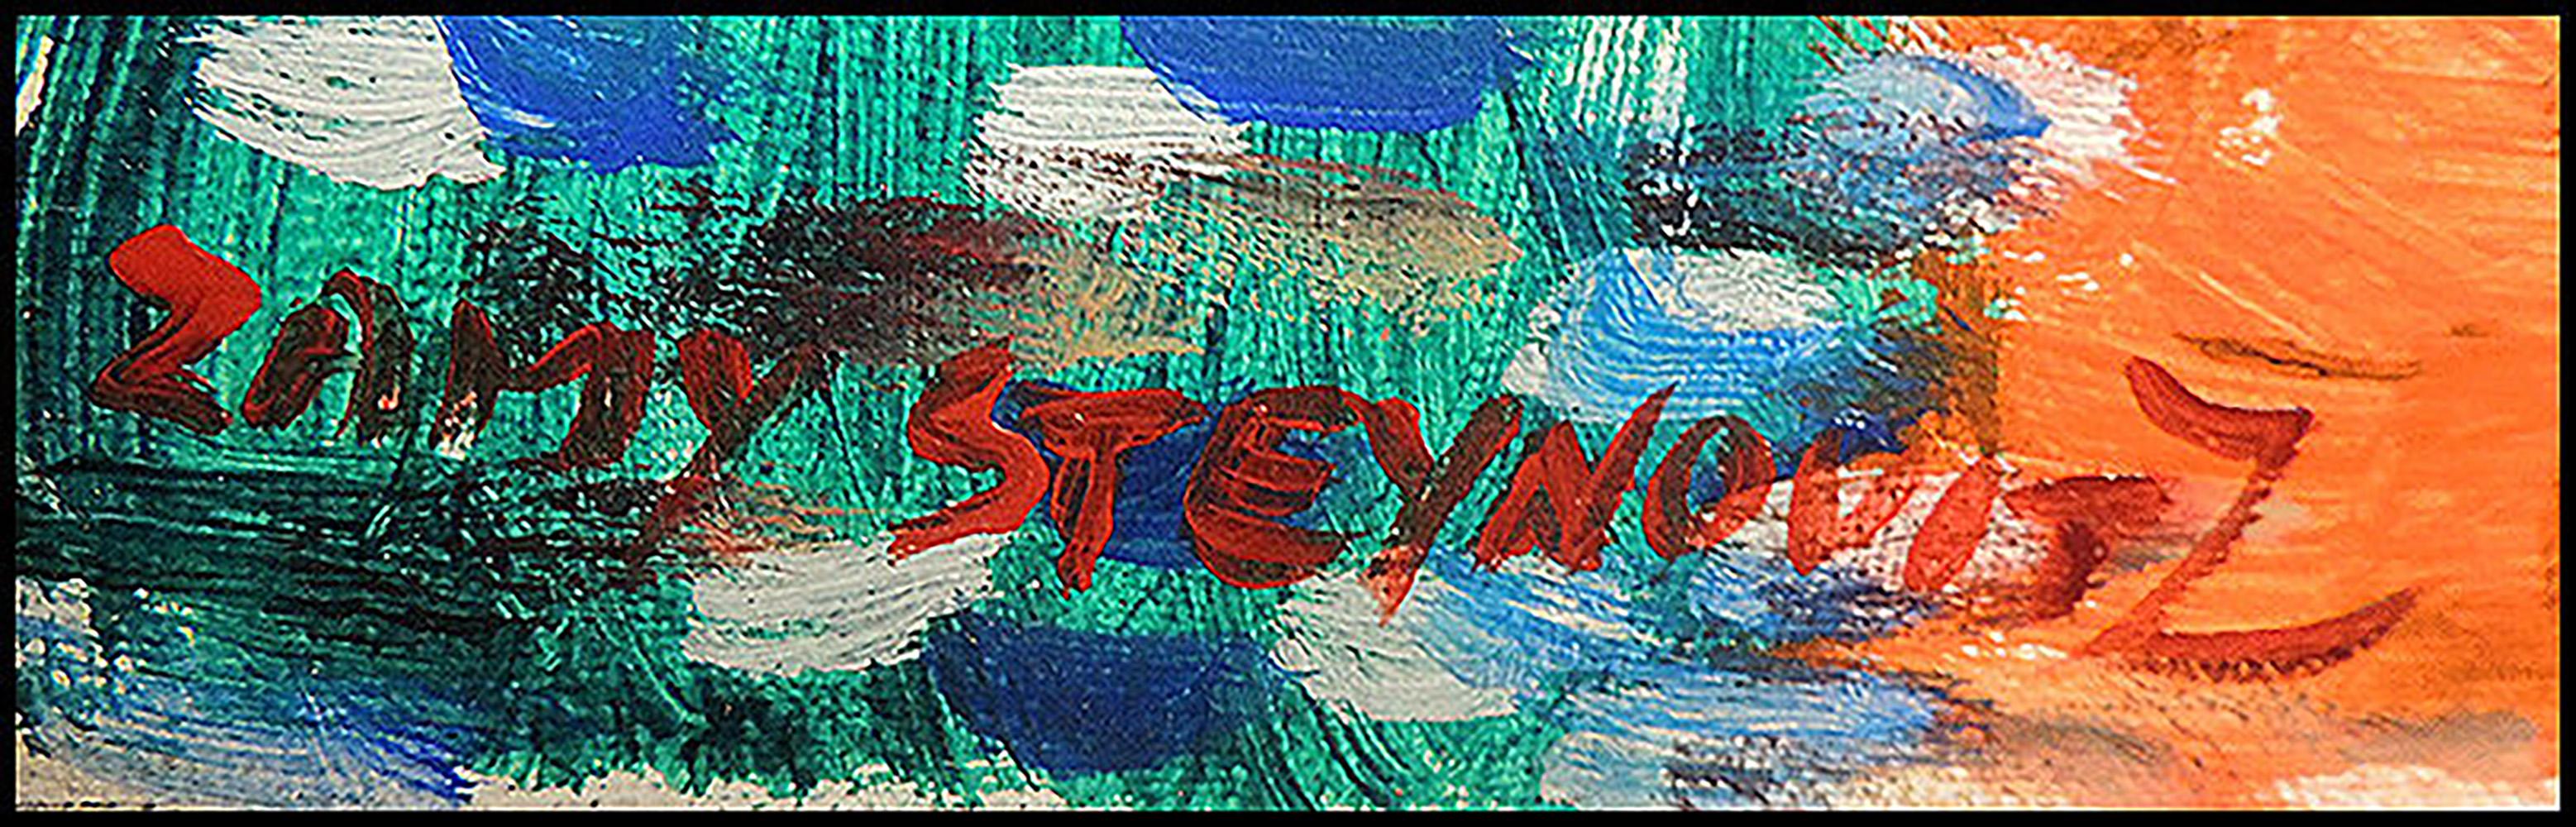 Zamy Steynovitz Original Oil Painting On Canvas Signed Portrait Seascape Artwork For Sale 2